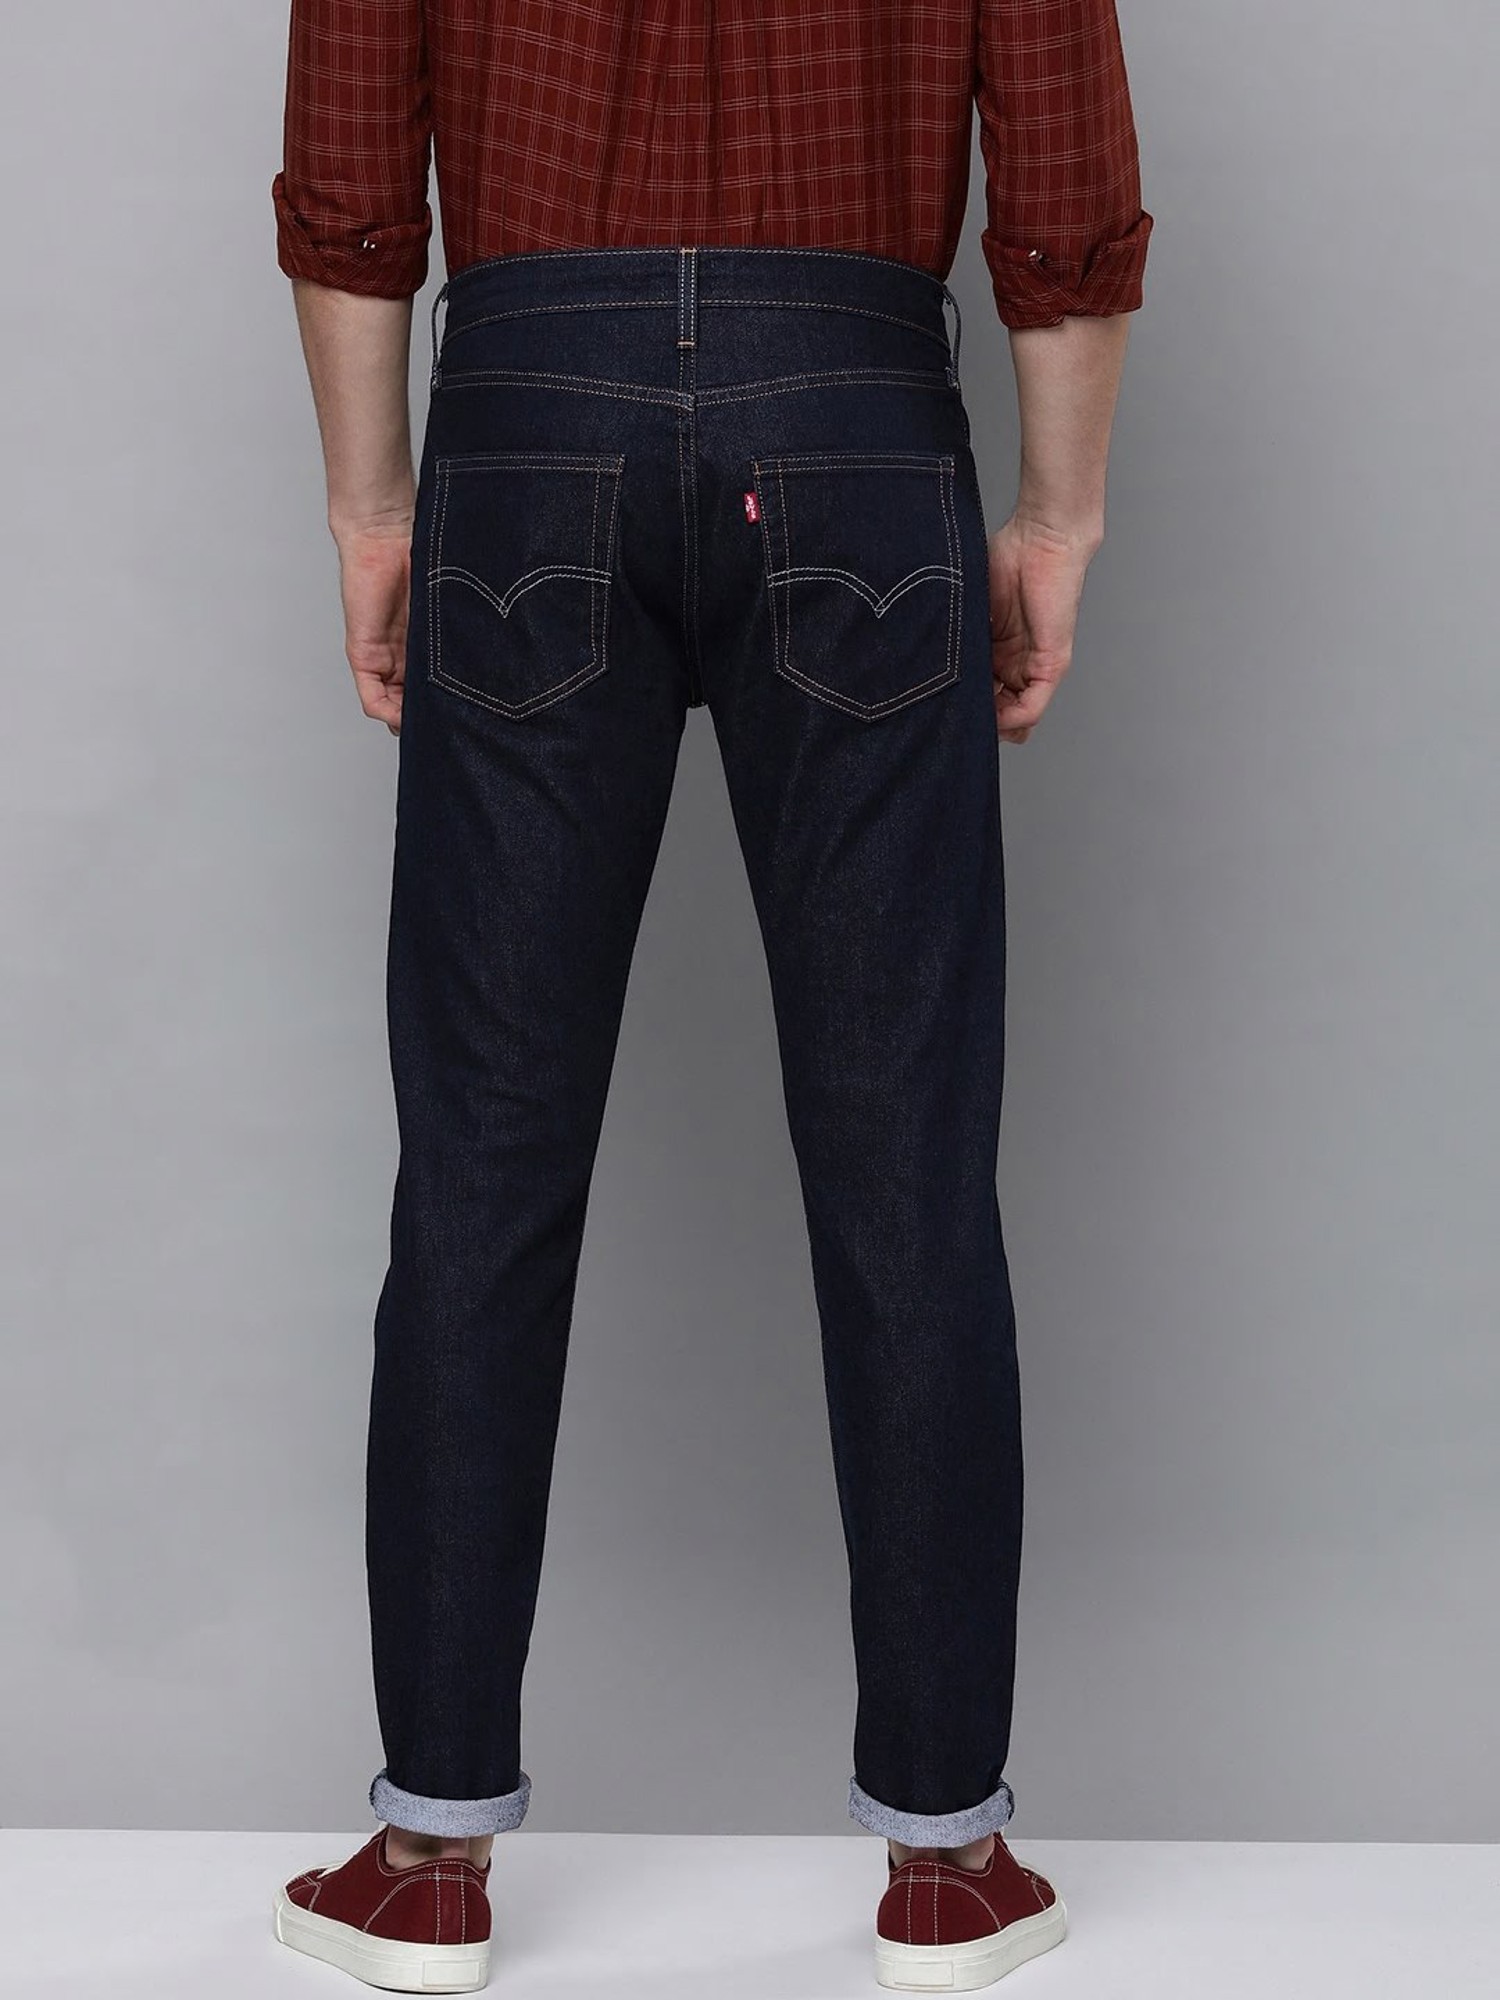 Buy Levi's 512 Dark Indigo Slim Fit Jeans for Men Online @ Tata CLiQ